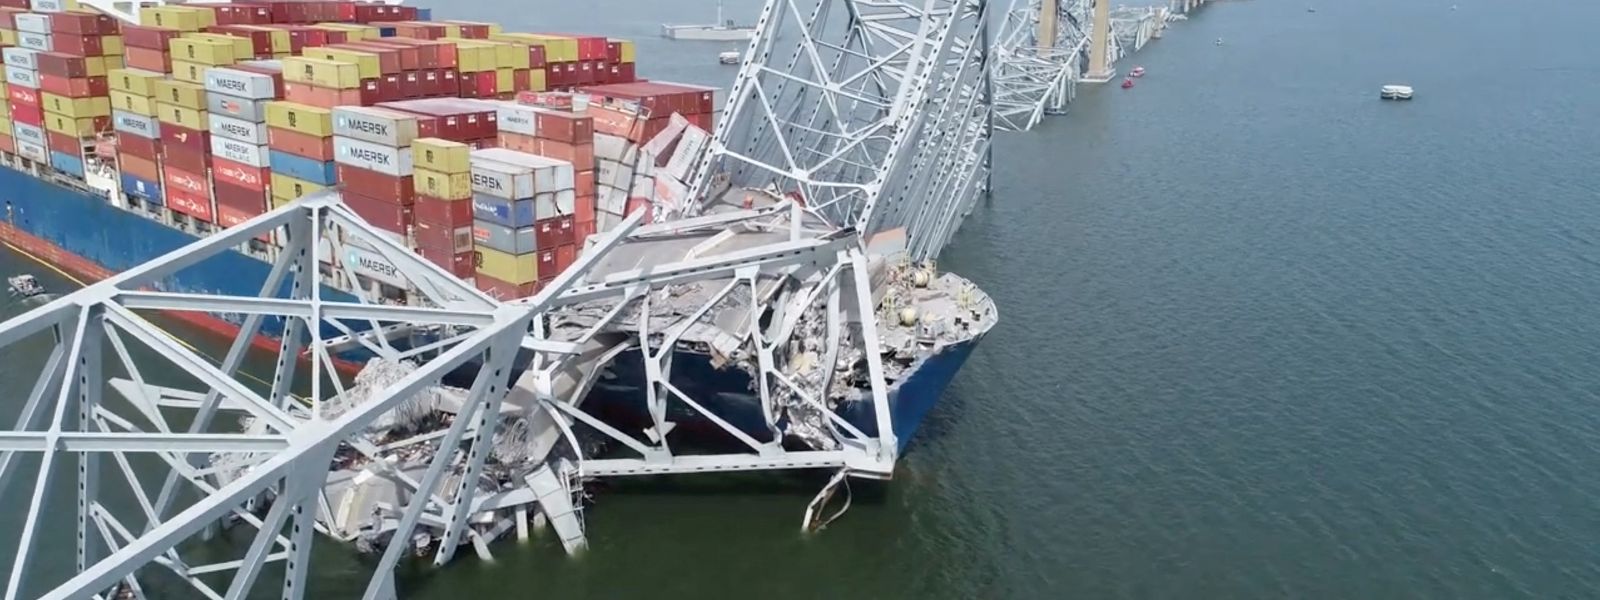 Baltimore Ship Was Carrying 'CLASS-9' Hazard Items